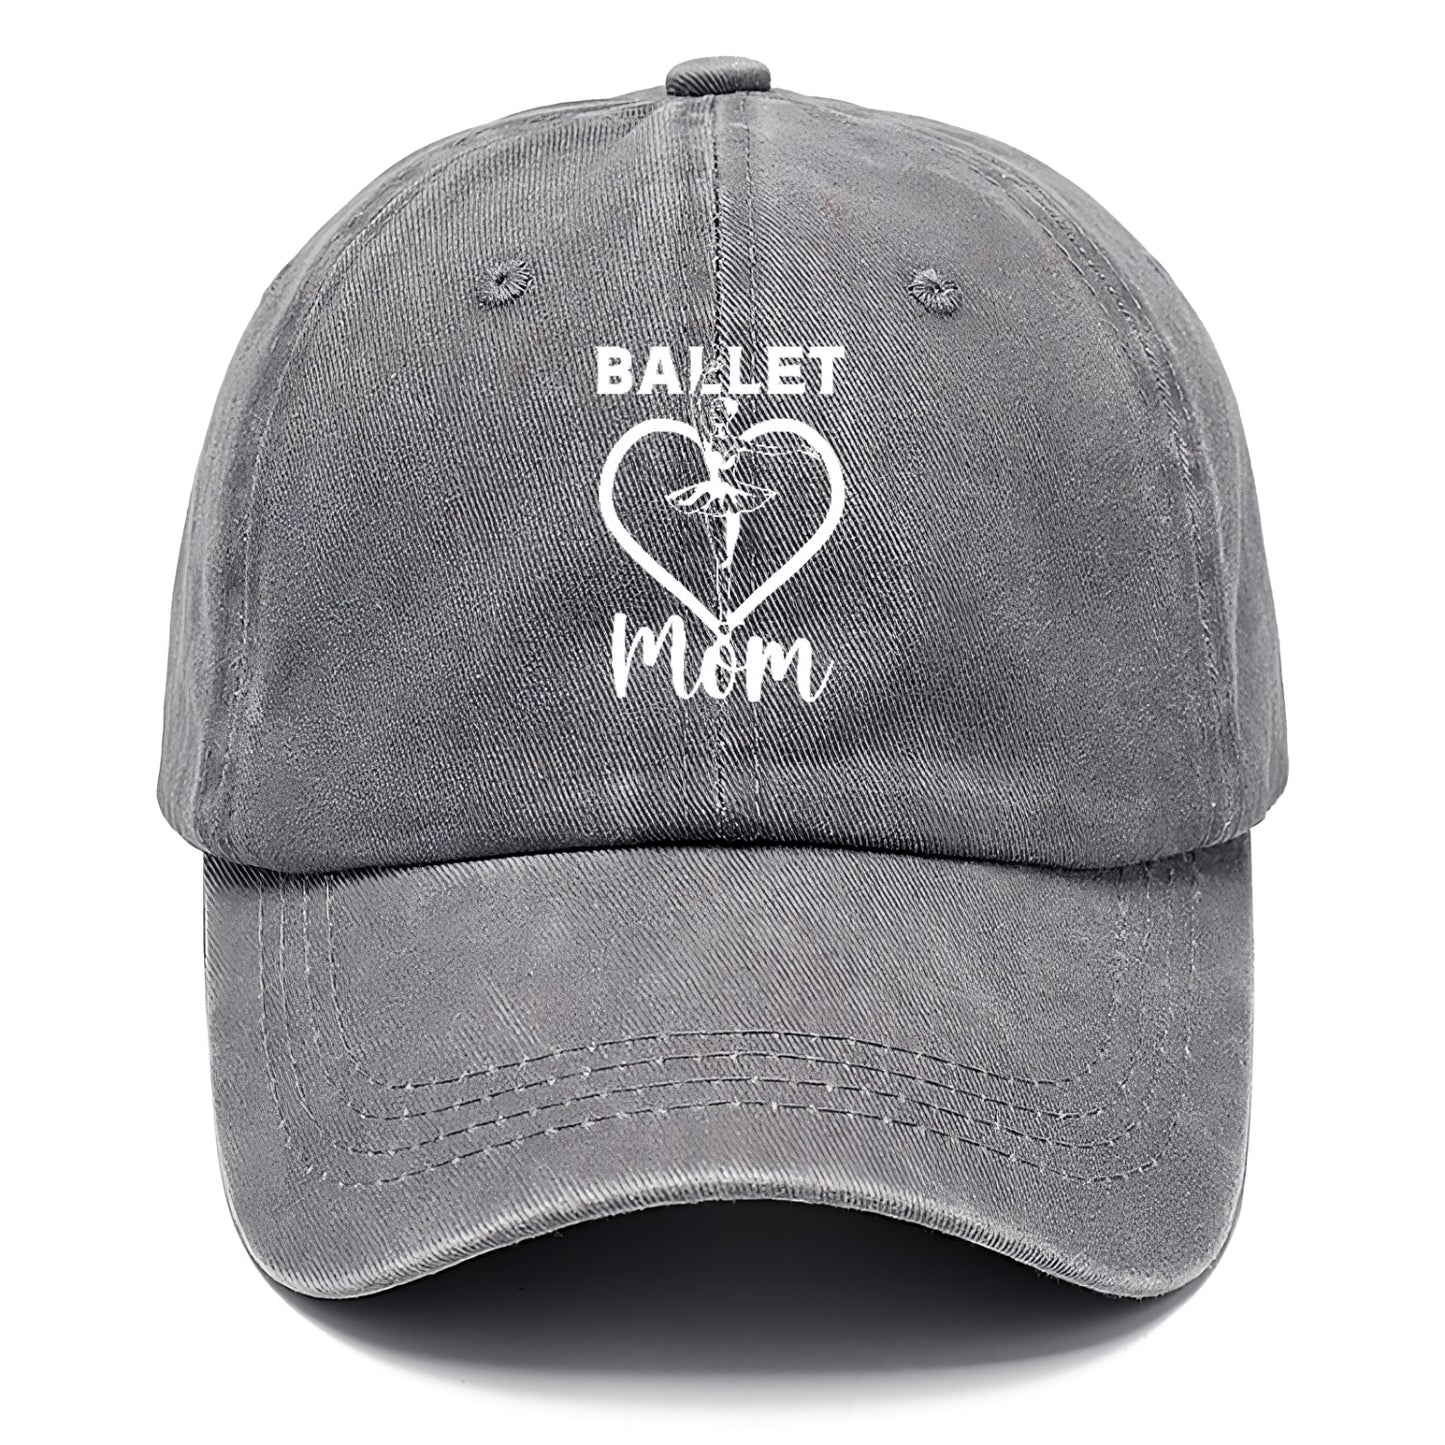 ballet mom Hat